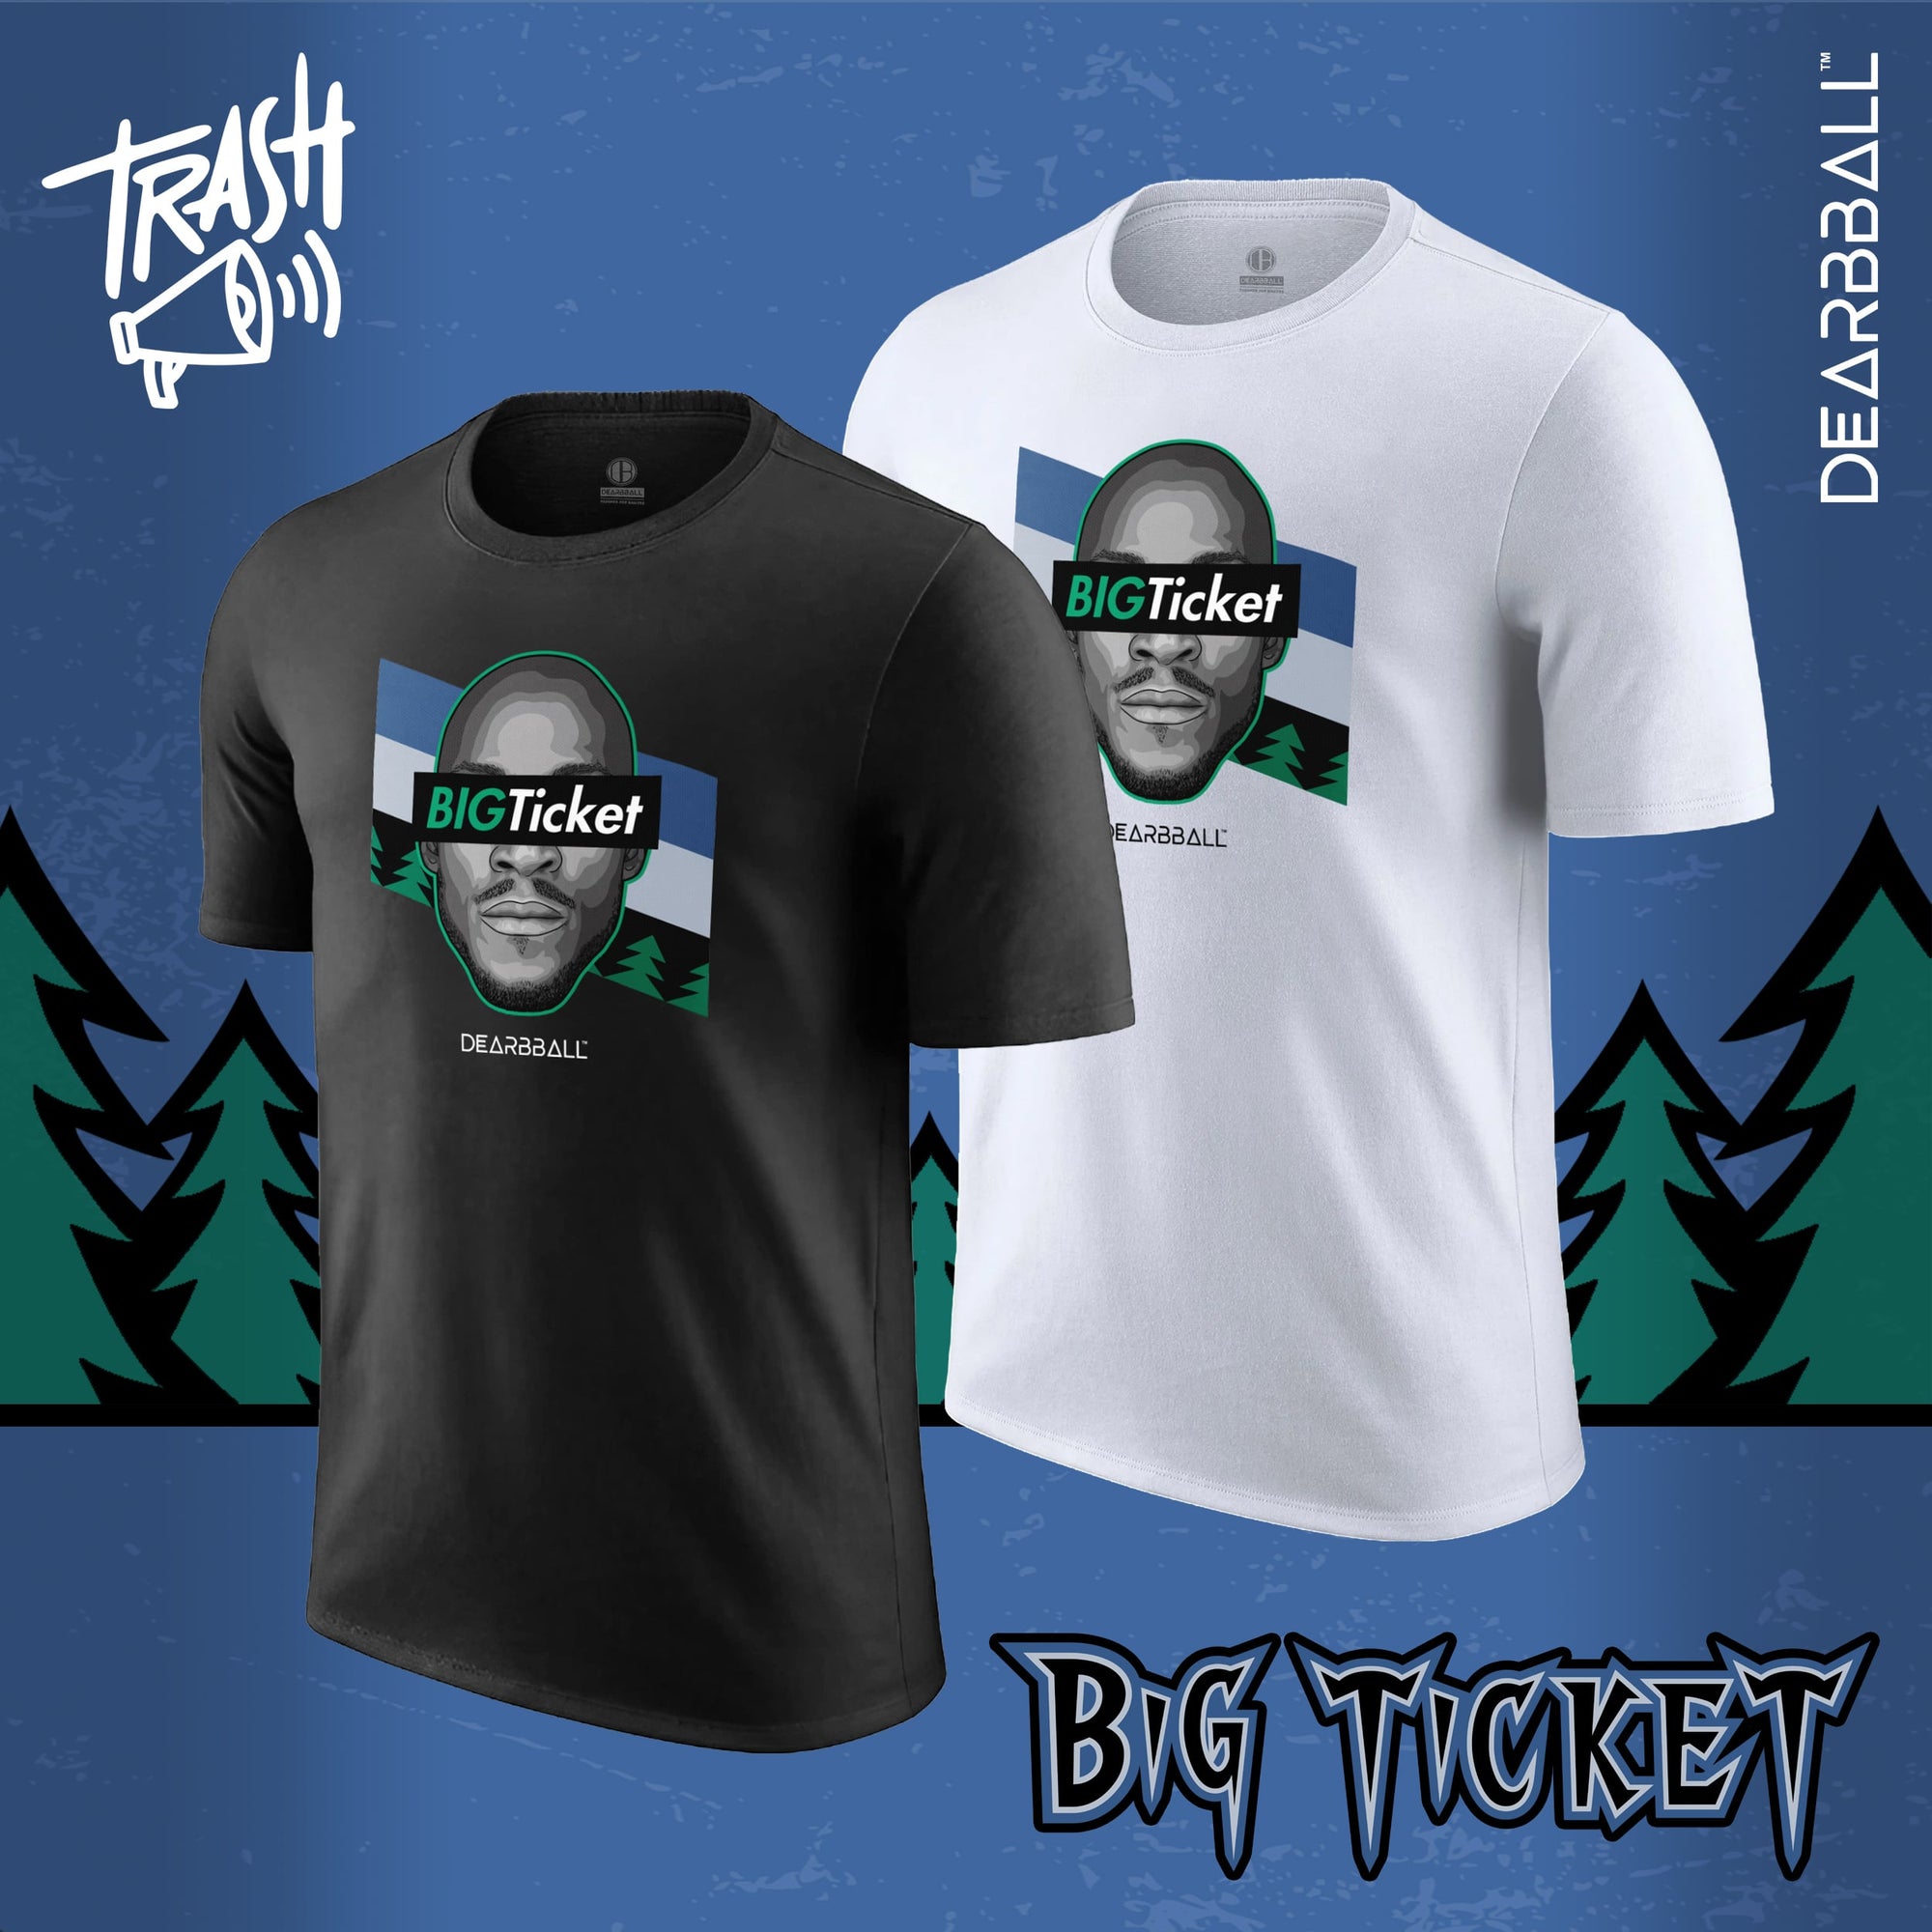 DearBBall Premium T-Shirt - BIGTicket Minnesota Trash 📢 Broderie Edition